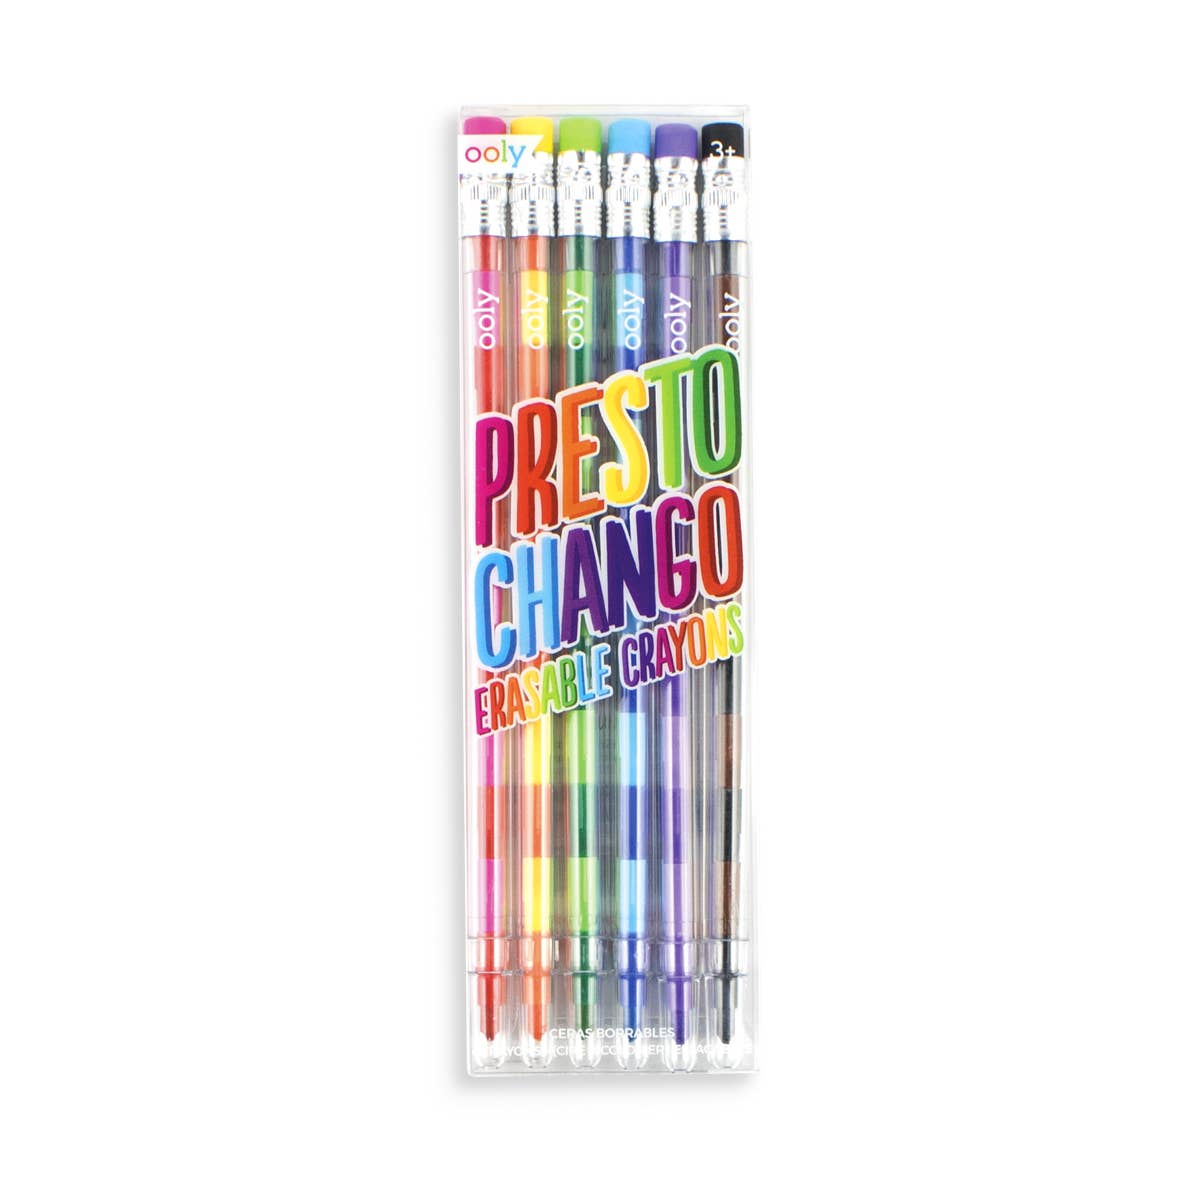 Presto Chango Crayon Pencils Tea for Three: A Children's Boutique